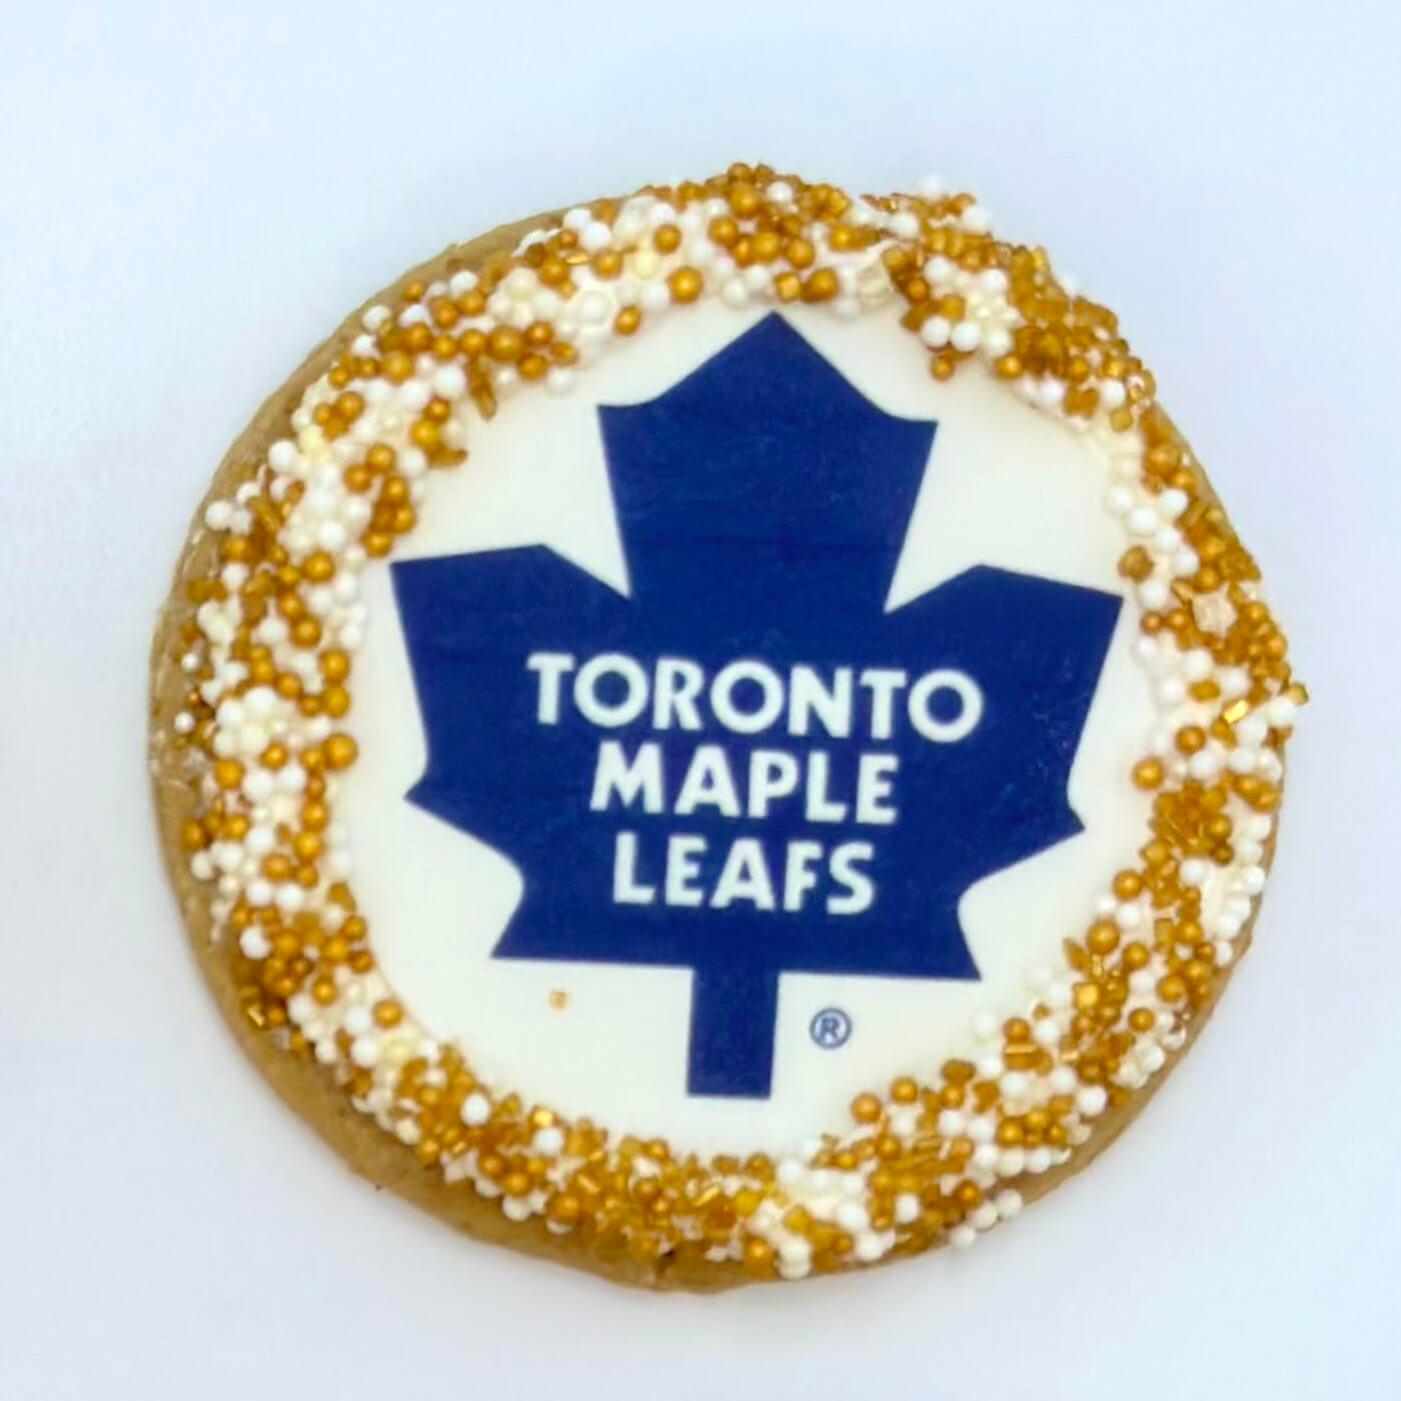 Gluten-Free Nut-Free Maple Leafs Cookies